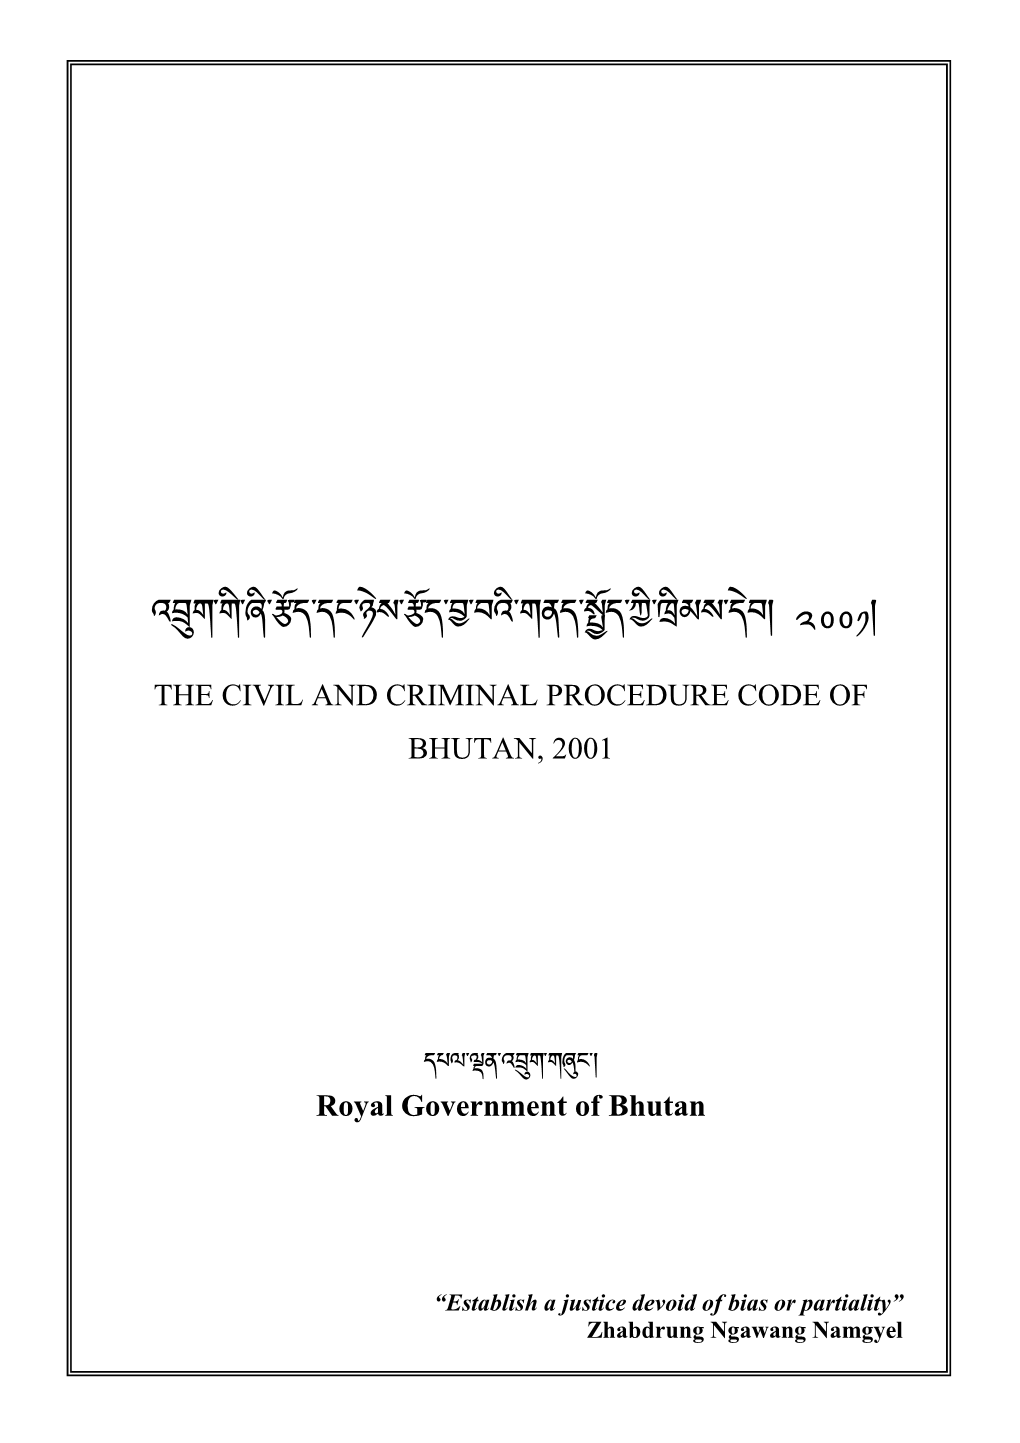 Civil and Criminal Procedure Code of Bhutan 2001 English Version